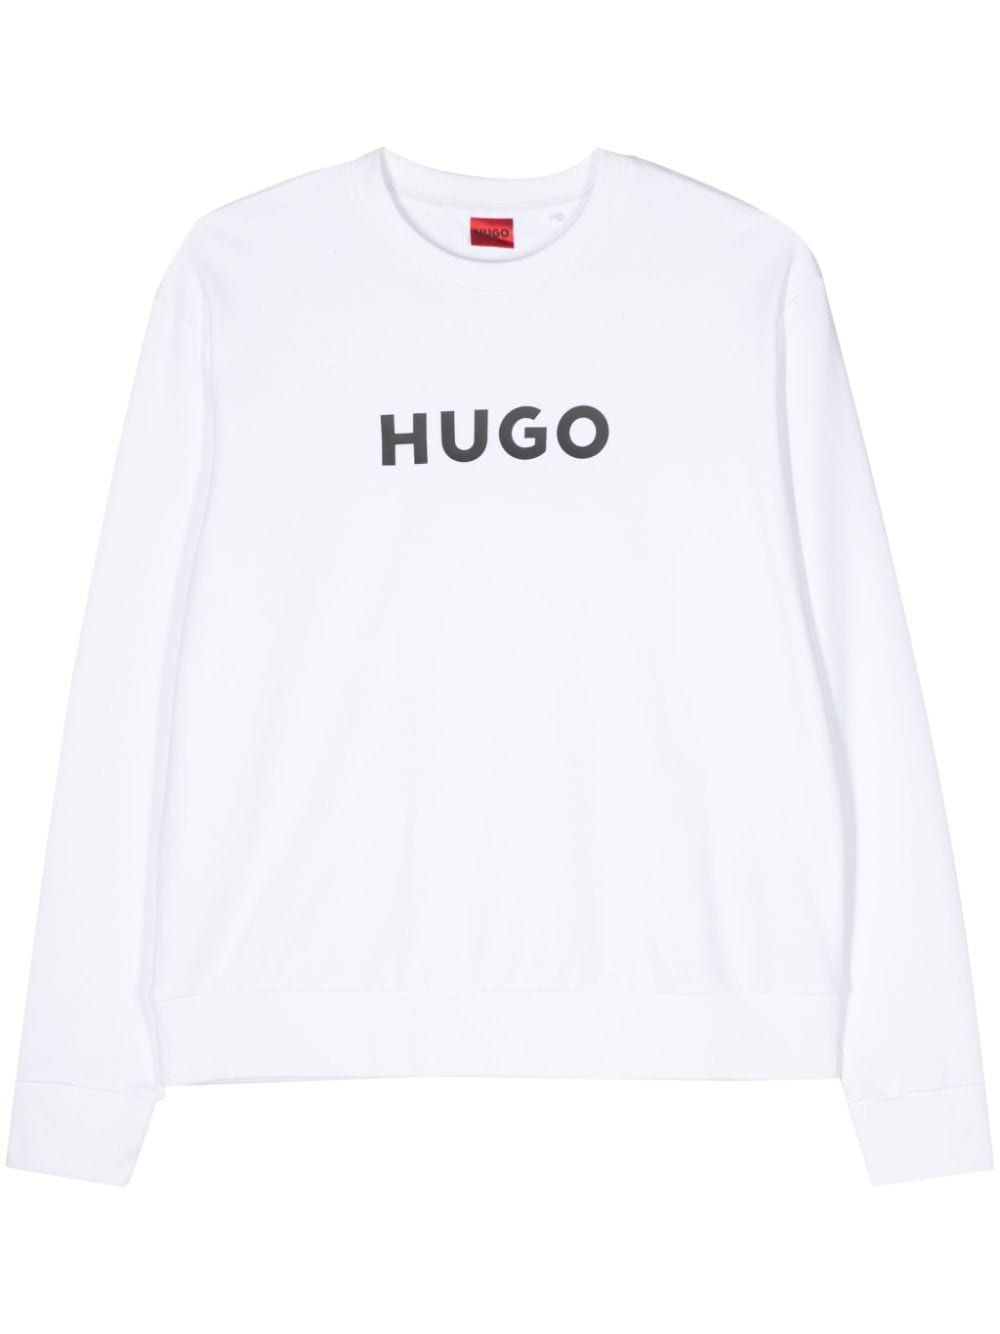 The Hugo cotton sweatshirt